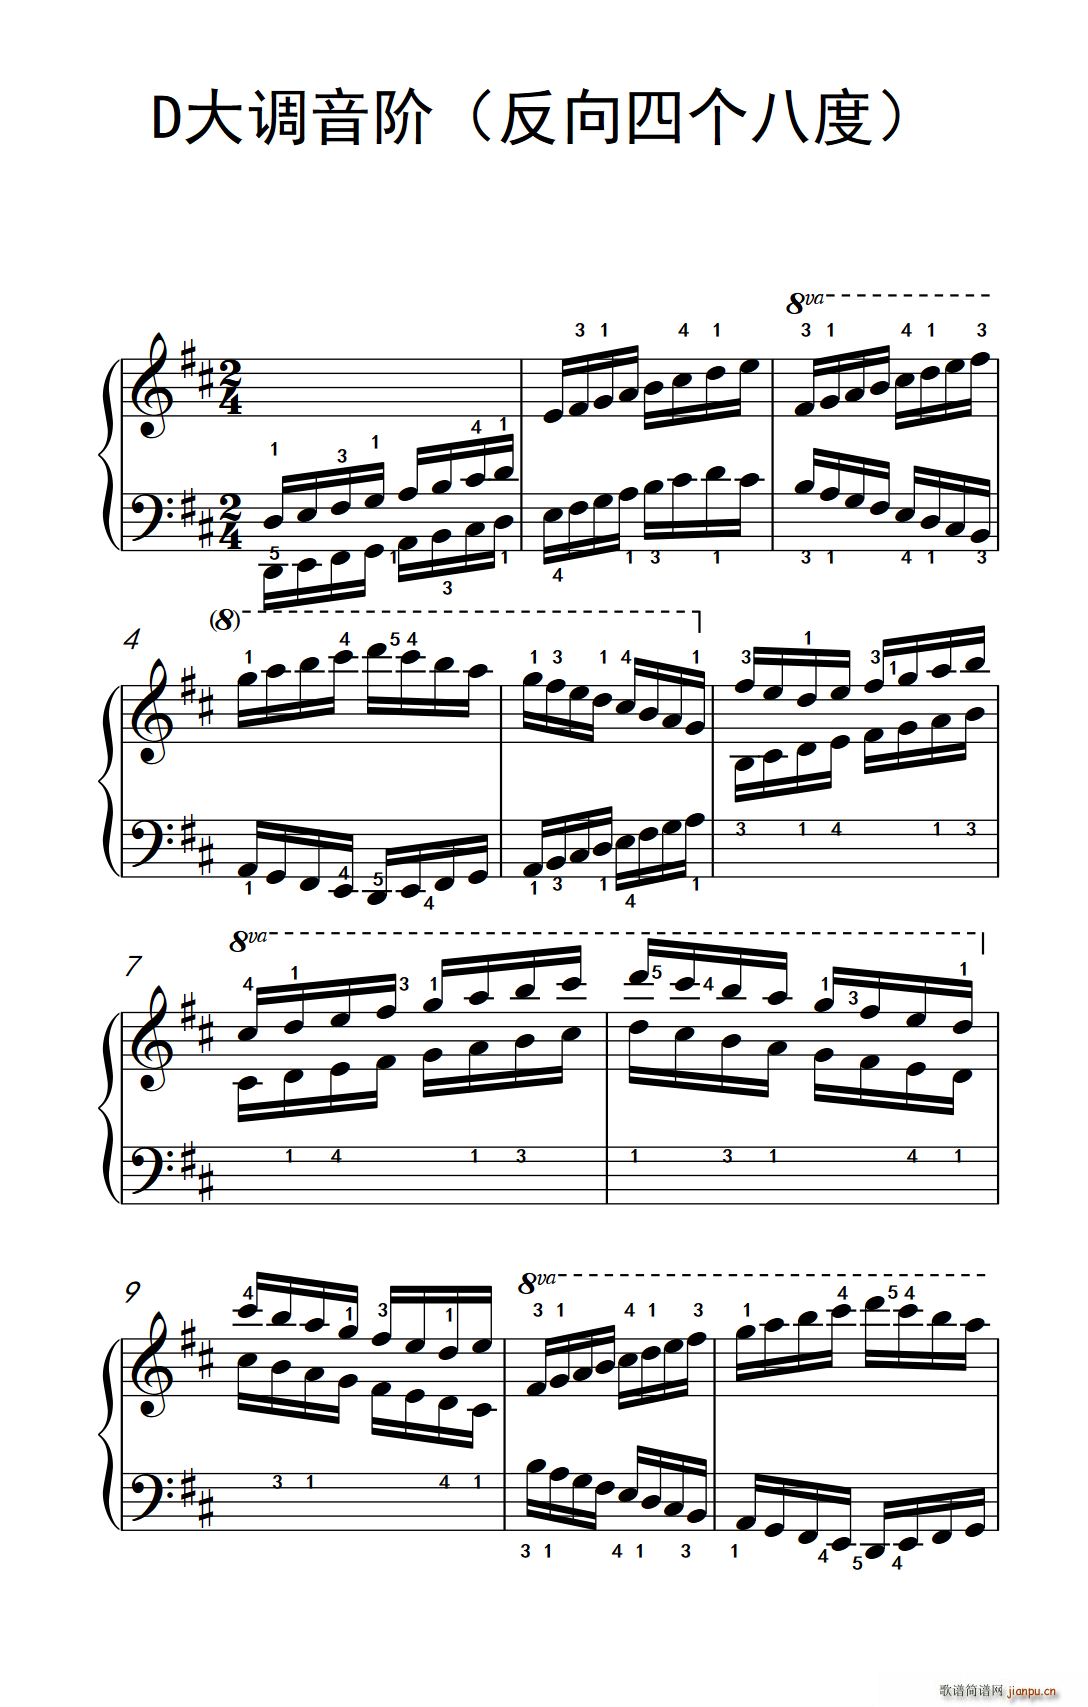 d大调音阶(反向四个八度)(儿童钢琴练习曲)图片